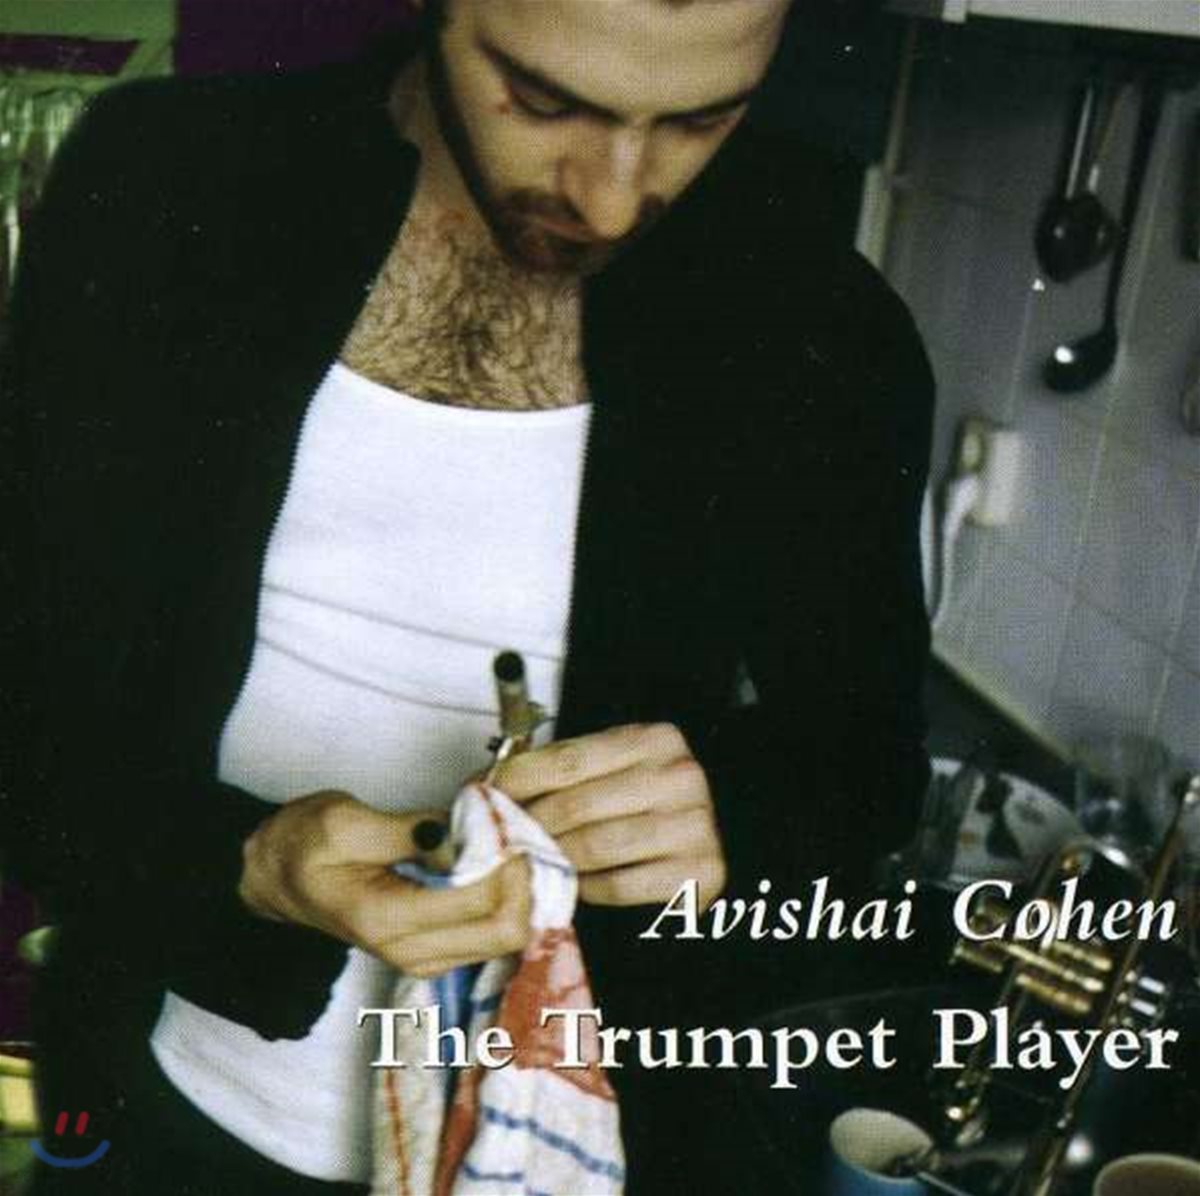 Avishai Cohen (아비샤이 코헨) - The Trumpet Player